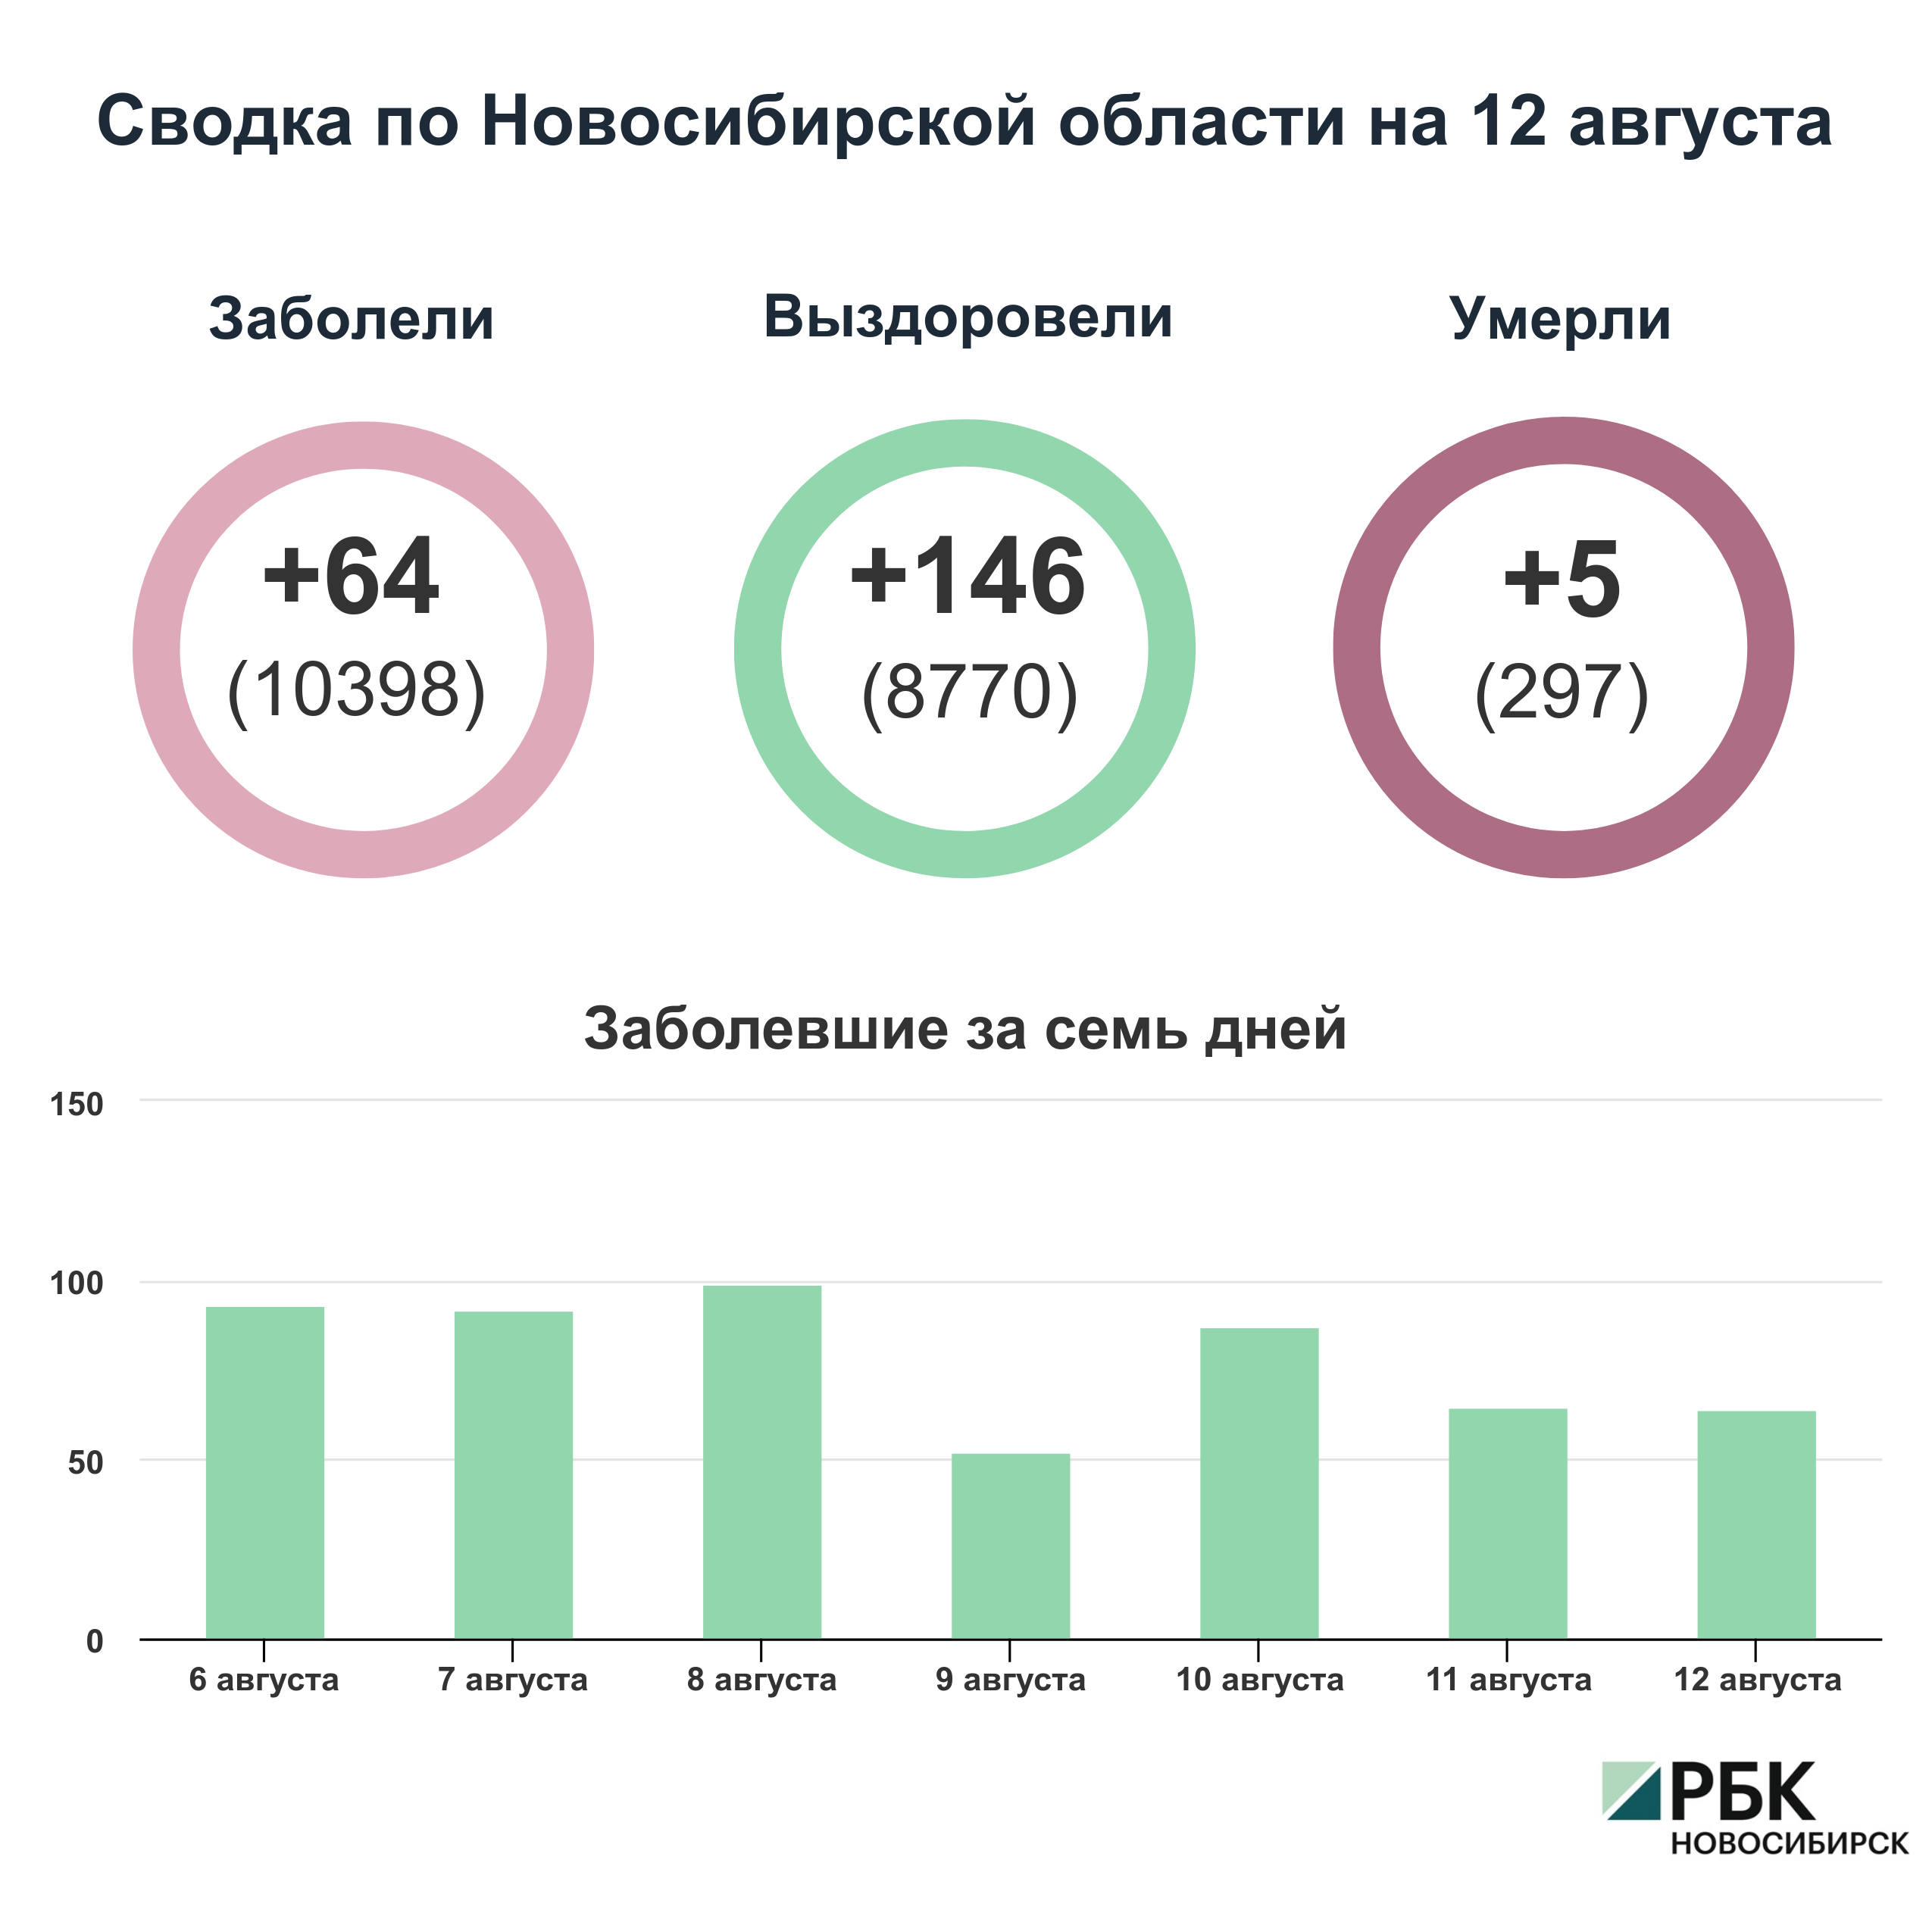 Коронавирус в Новосибирске: сводка на 12 августа